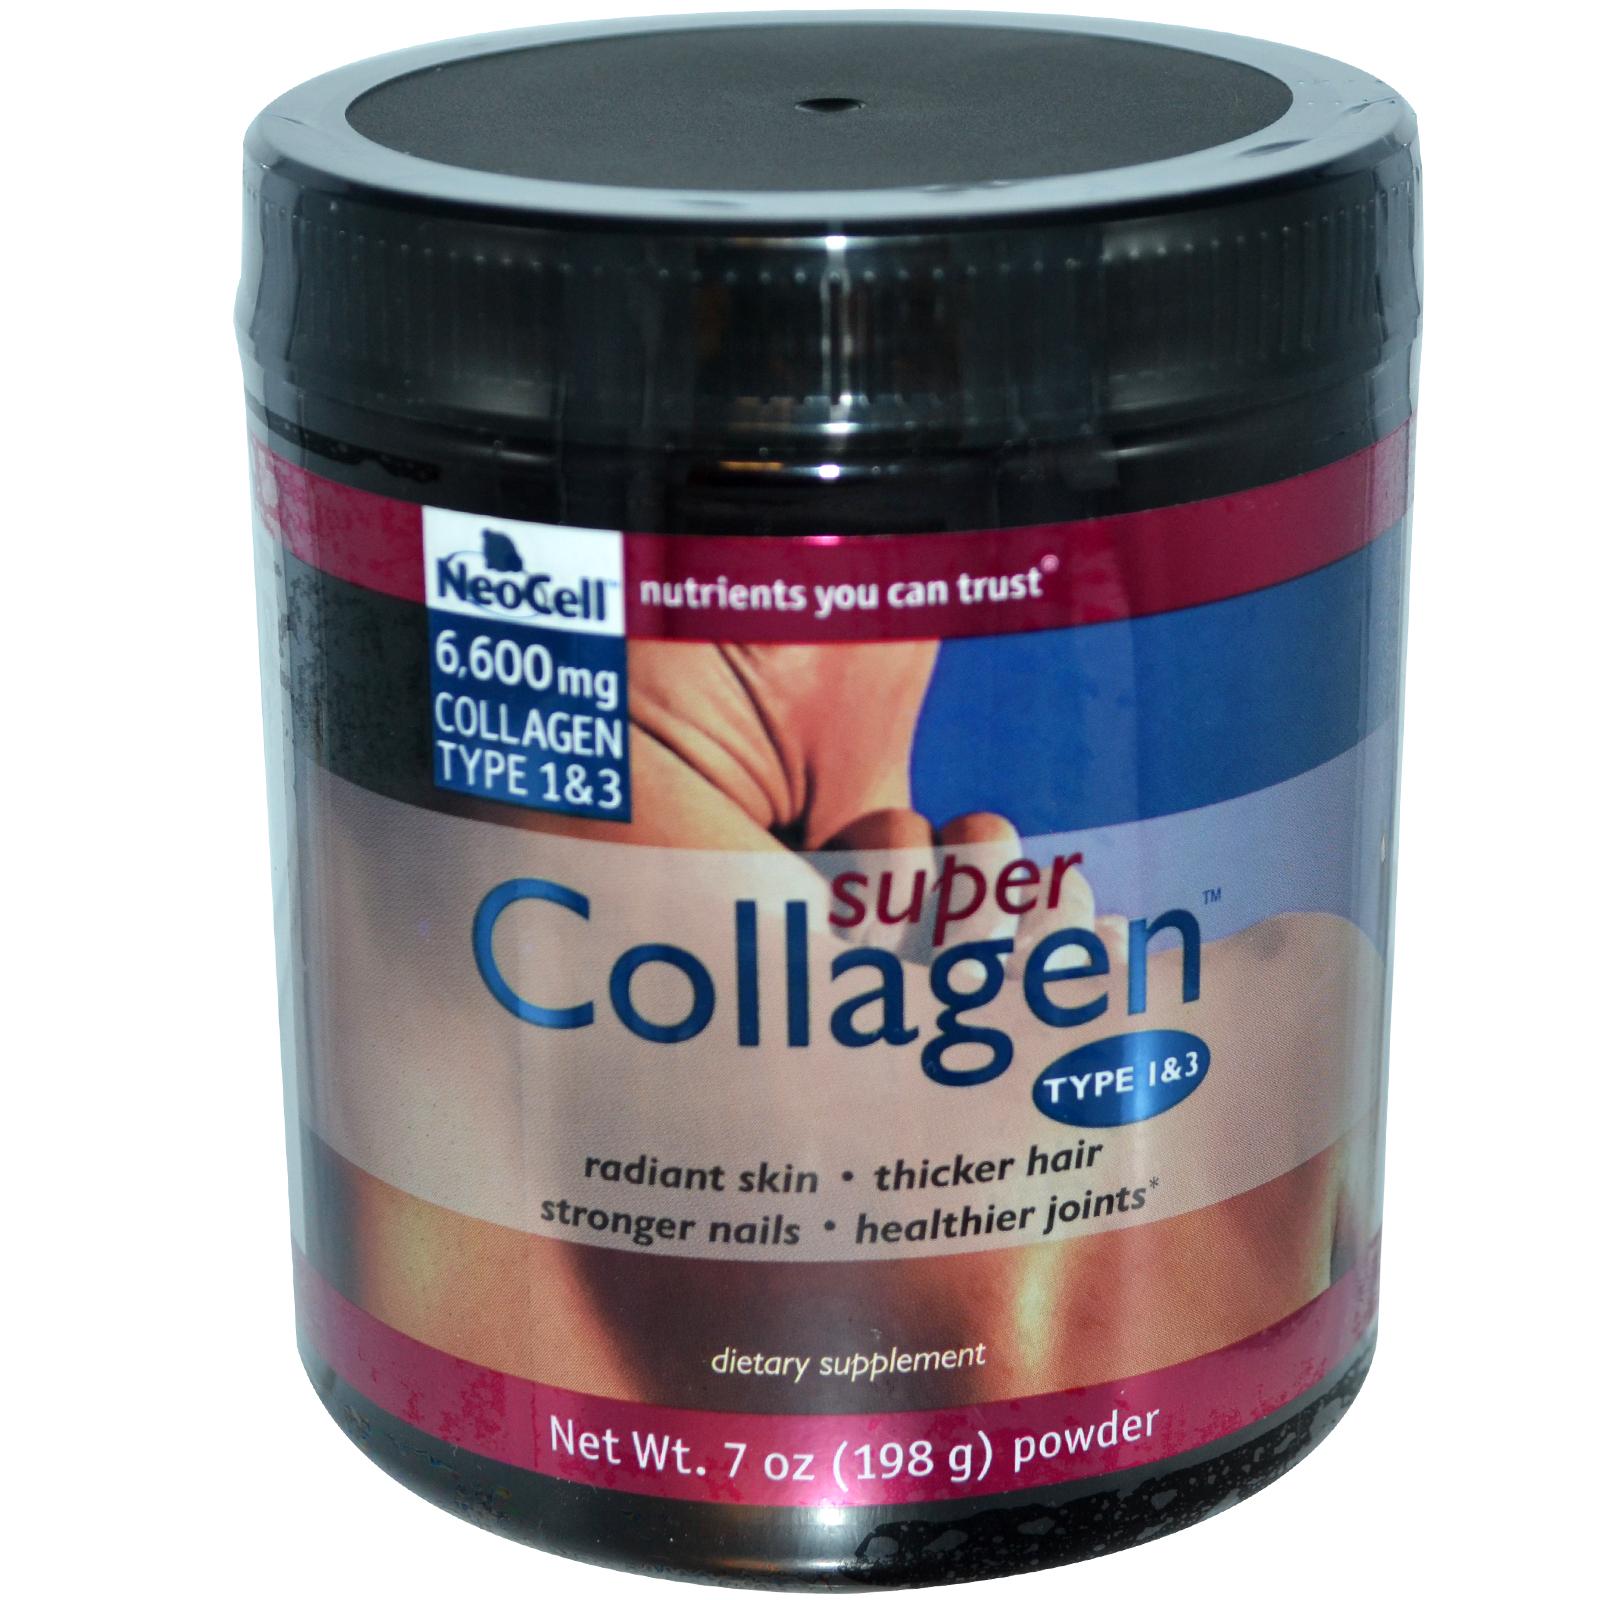 Neocell Collagen แบบผง 198 กรัม ทานได้ 1 เดือน 700 บาทเท่านั้น!!  ส่งฟรีลงทะเบียน - Pantip